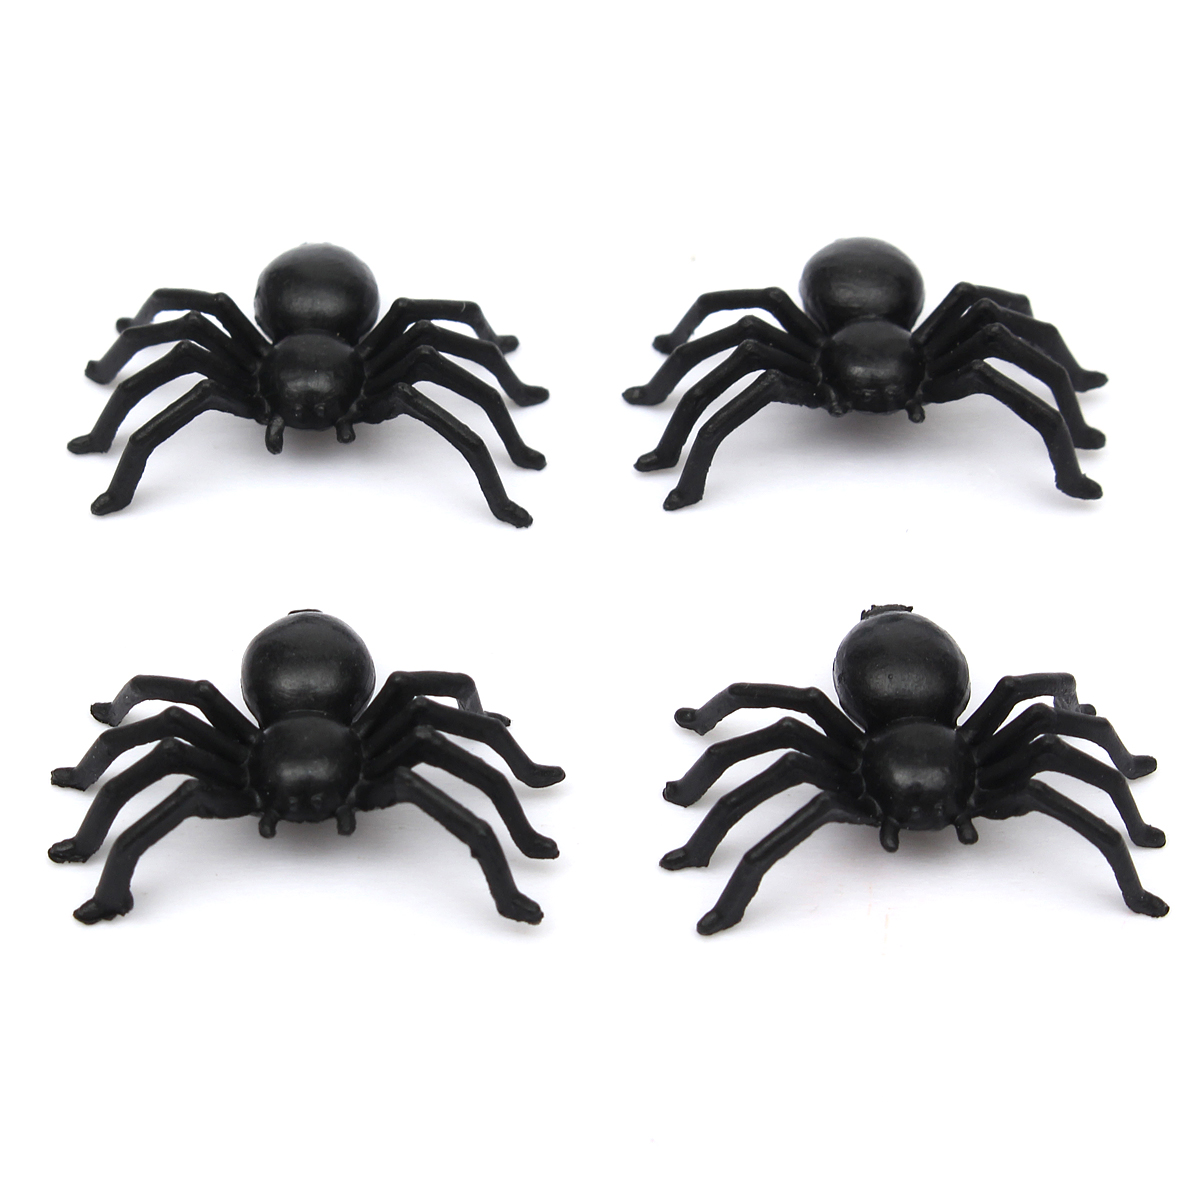 50pcs-Halloween-Plastic-Spiders-Spider-Funny-Joking-Toy-Decoration-995486